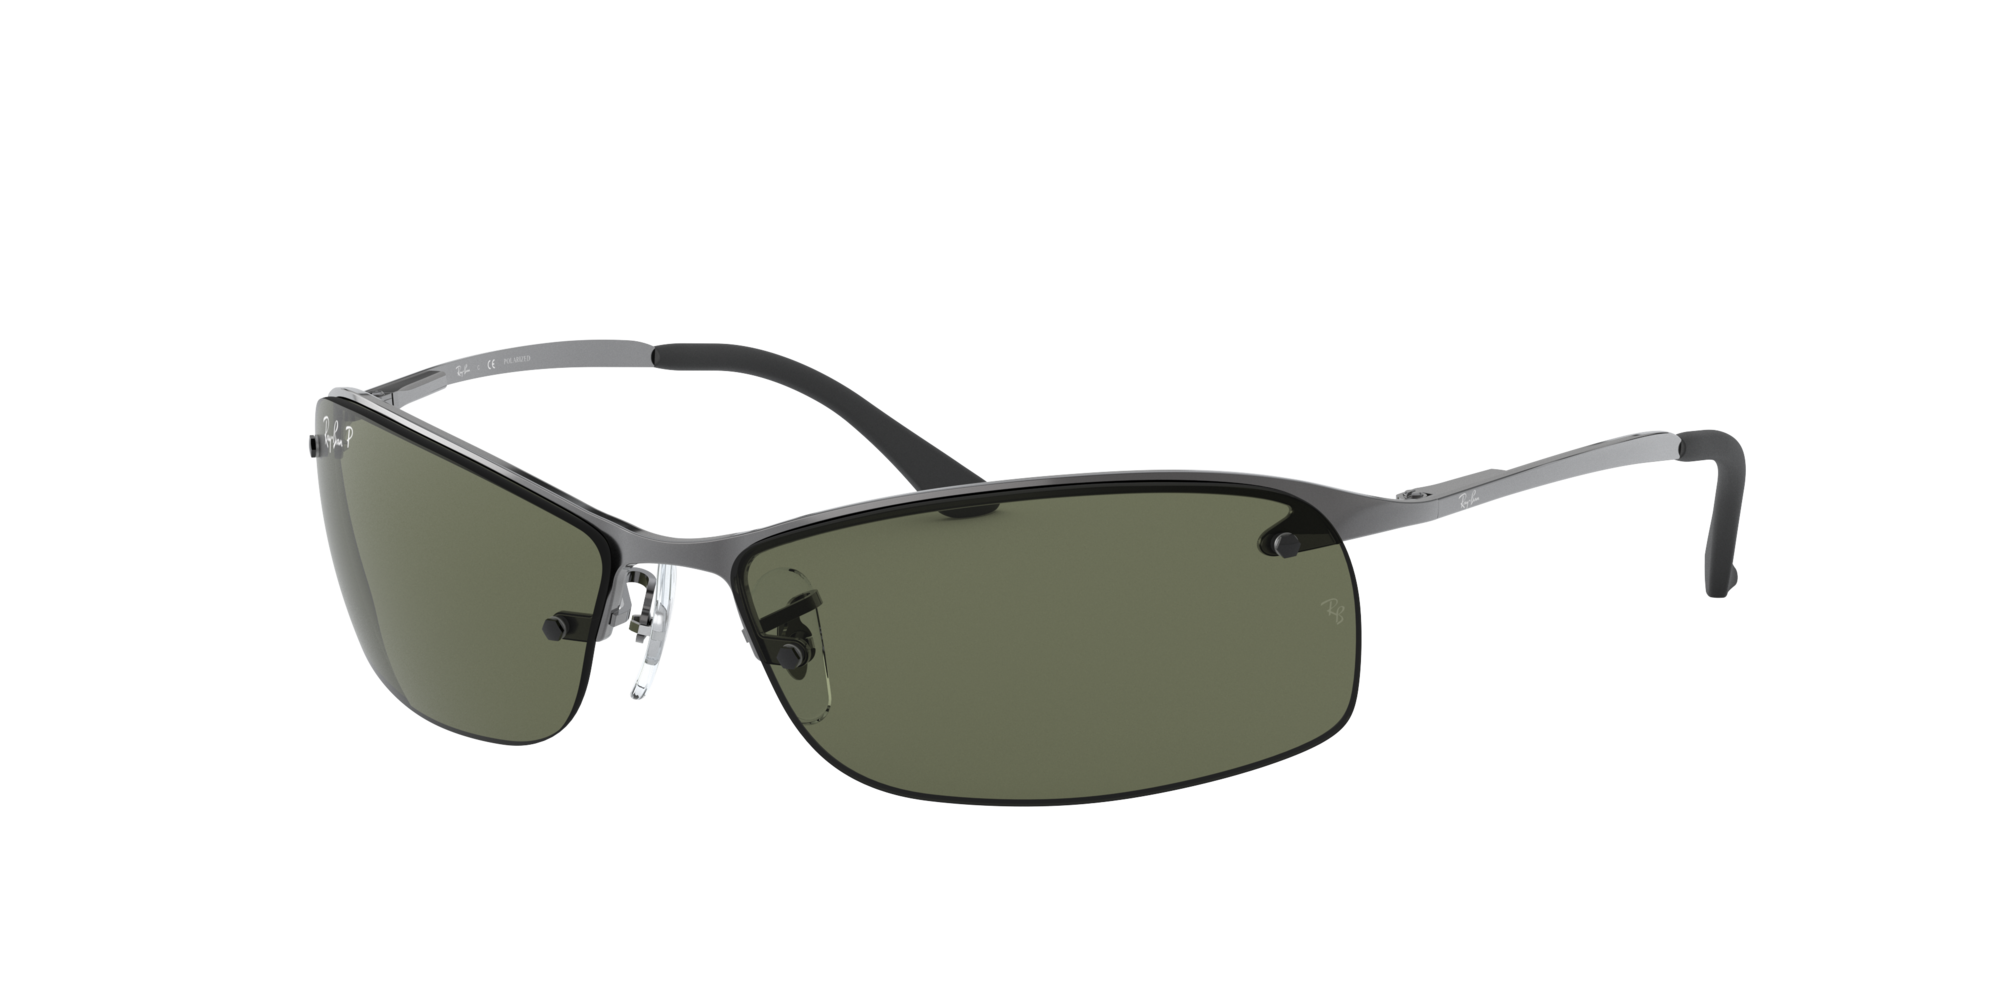 Angle_Left01 Ray-Ban RB 3183 (004/9A) Sunglasses Green / Grey